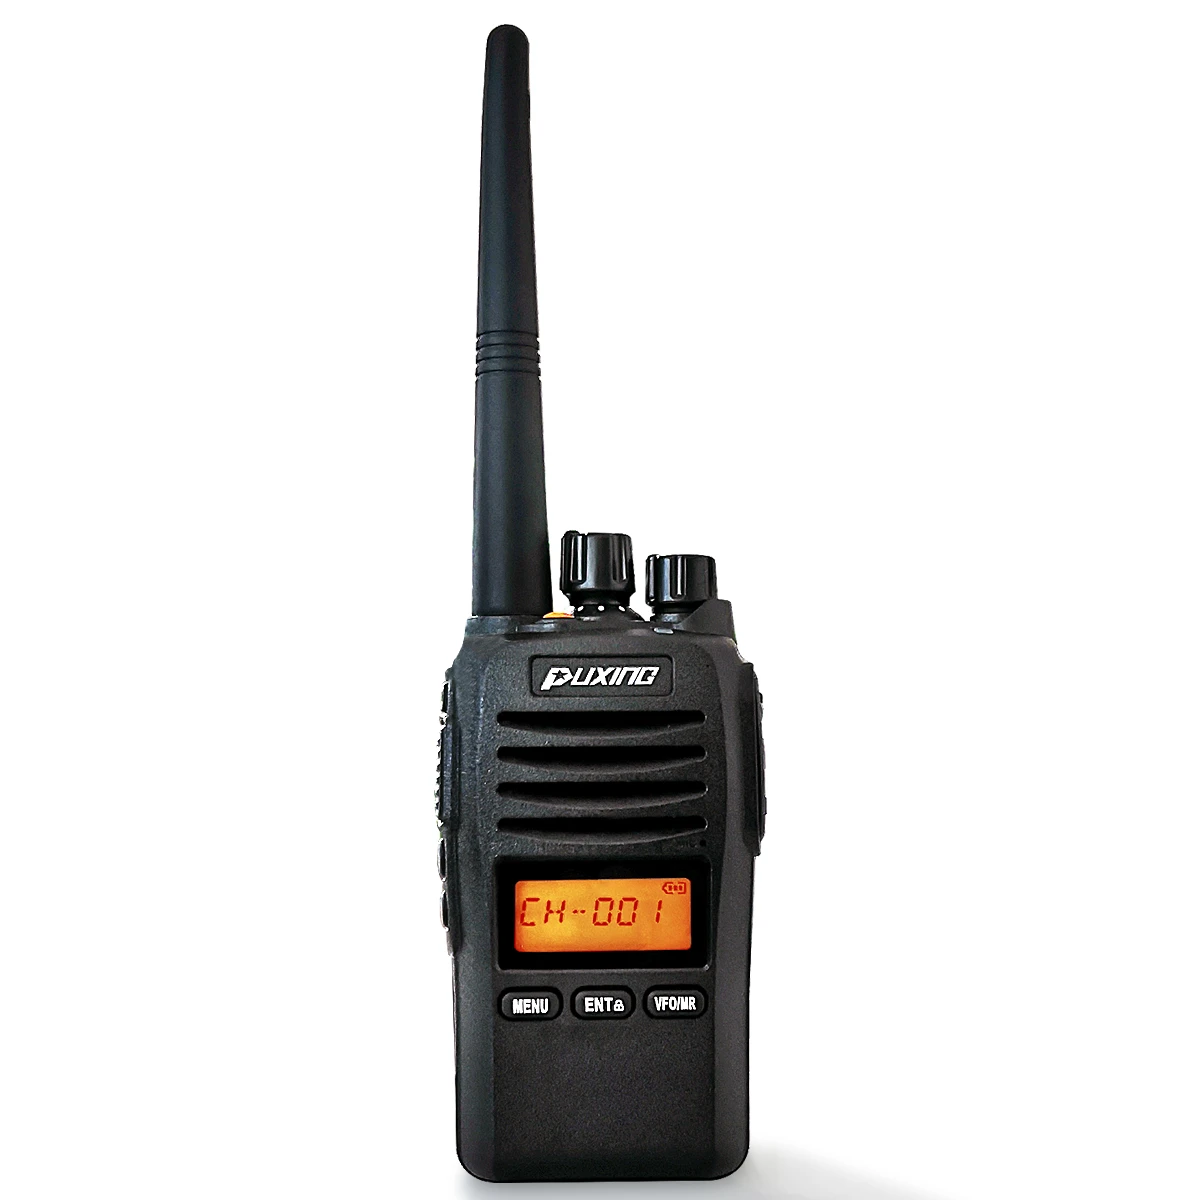 Puxing portable walkie talkie PX-578S ip67 waterproof 0.5W 5W pmr446 walkie talkie